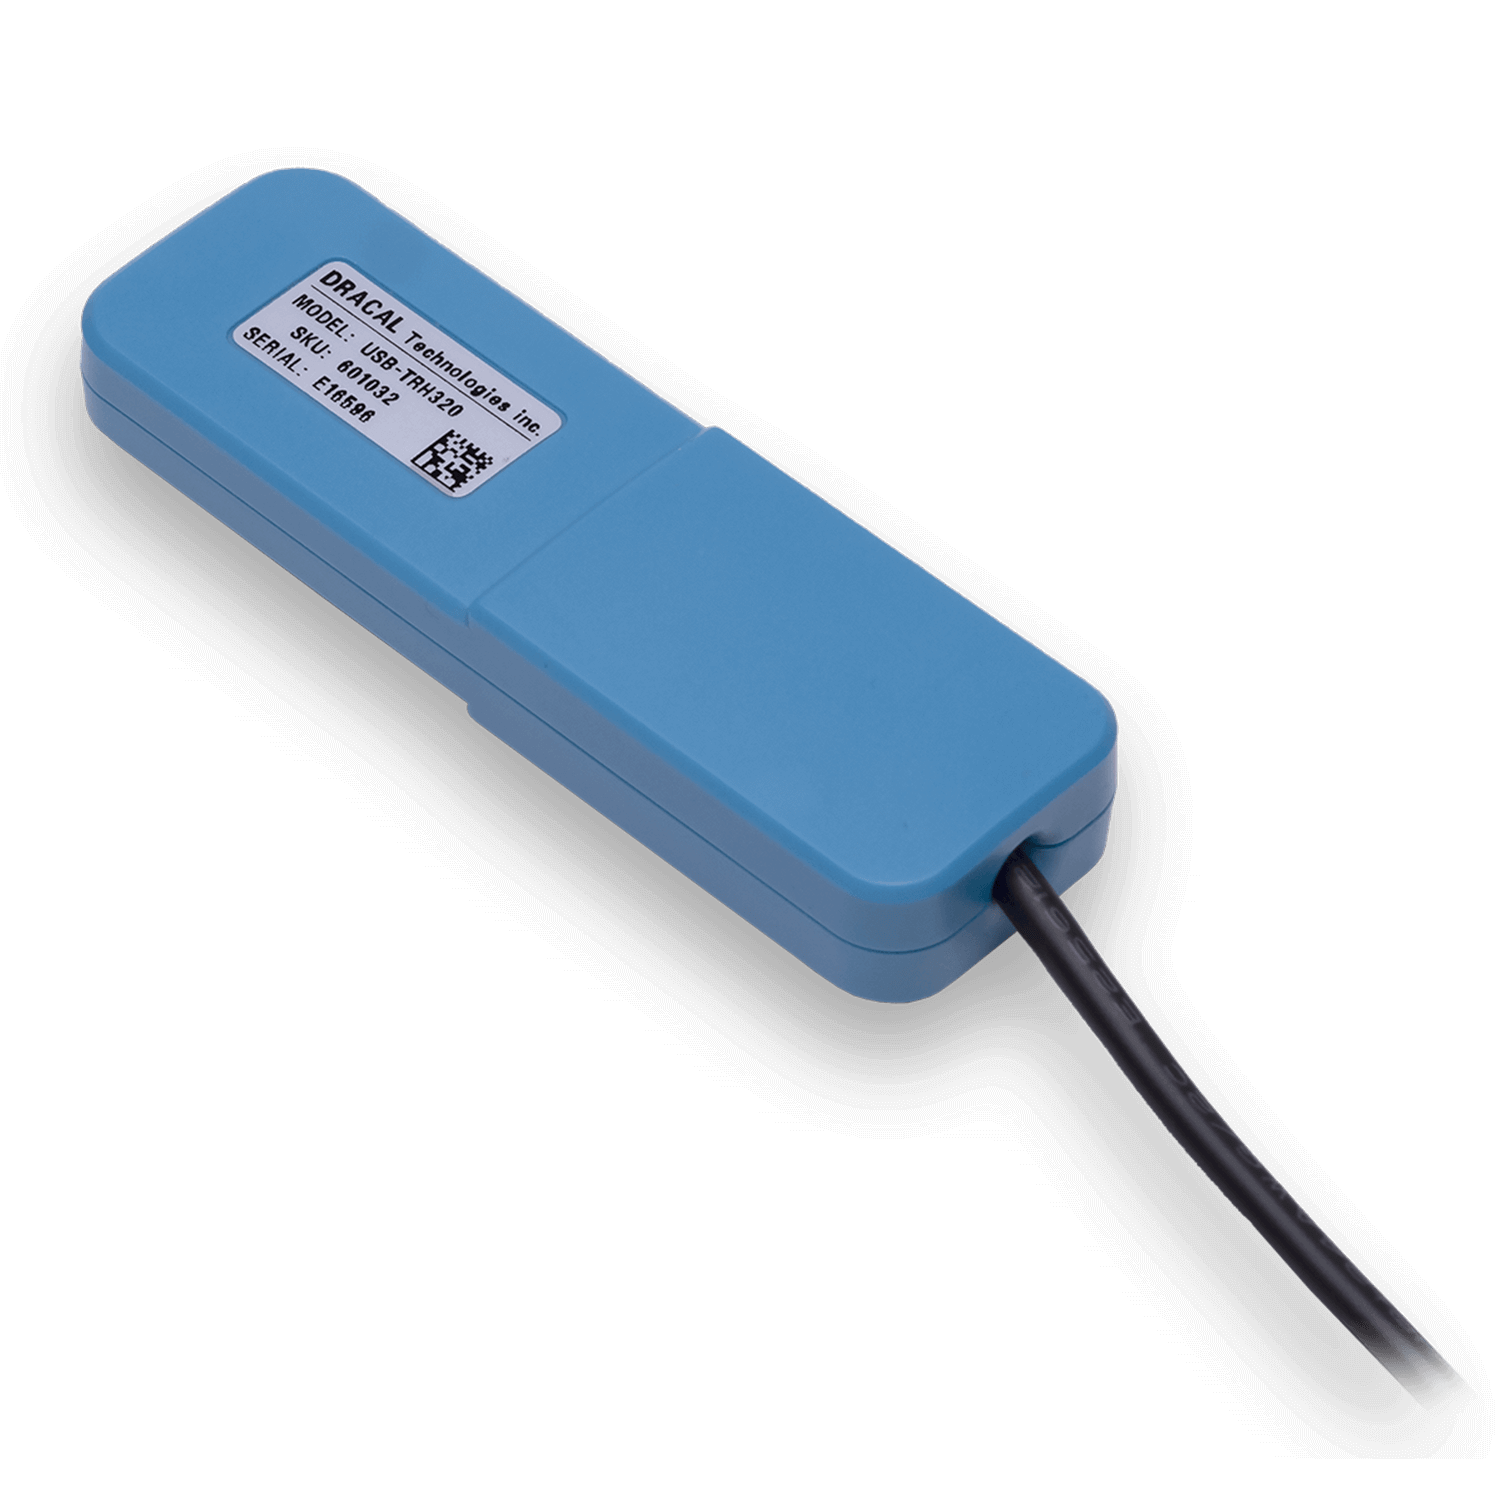 PCsensor USB Temperature Humidity Meter with External Probe(TEMPerX232)